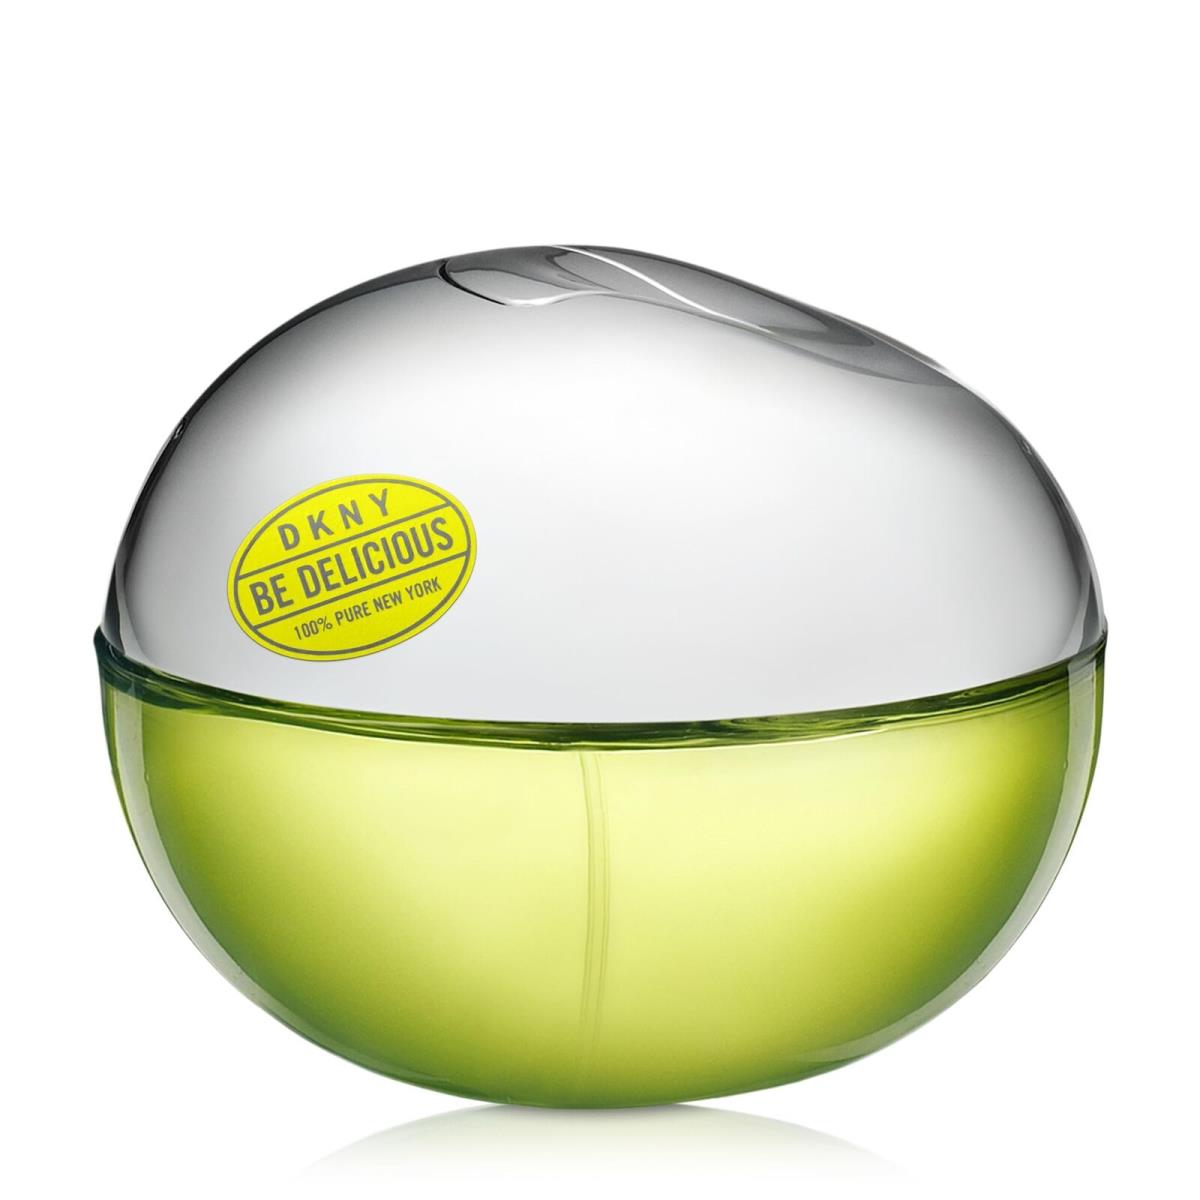 Dkny Be Delicious Eau de Parfum 2 Piece Gift Set For Women - Perfume Spray 3.4 F